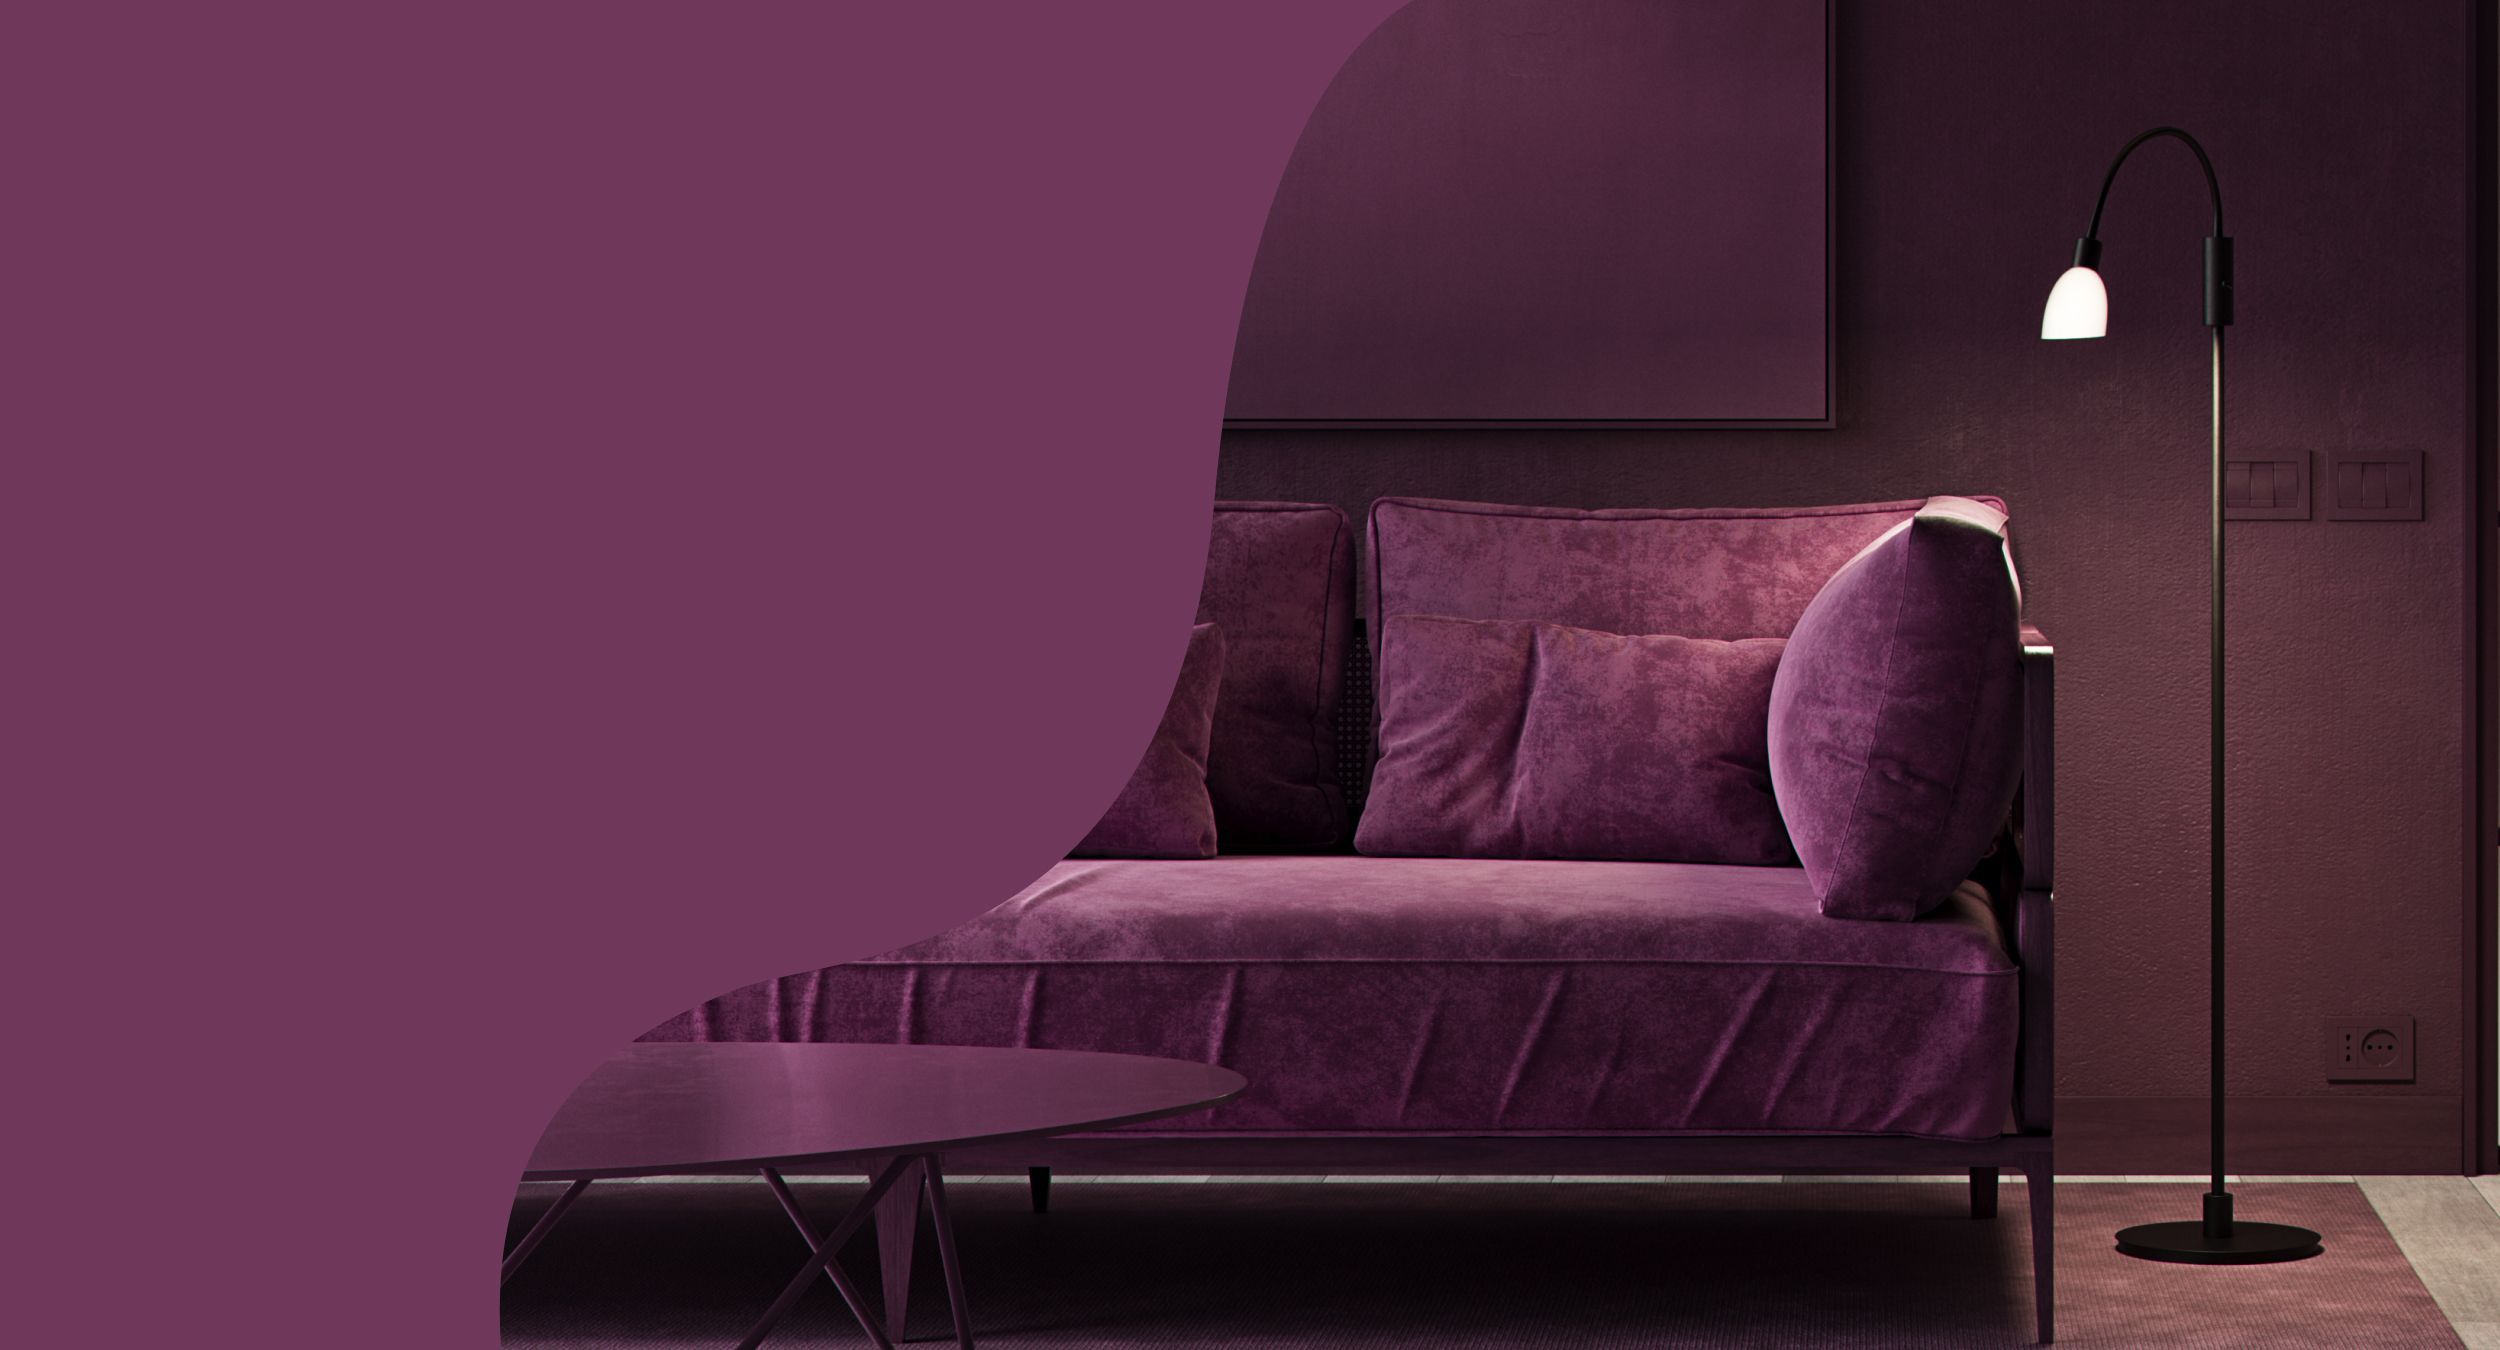 Relief floor lamp next to a sofa in purple room